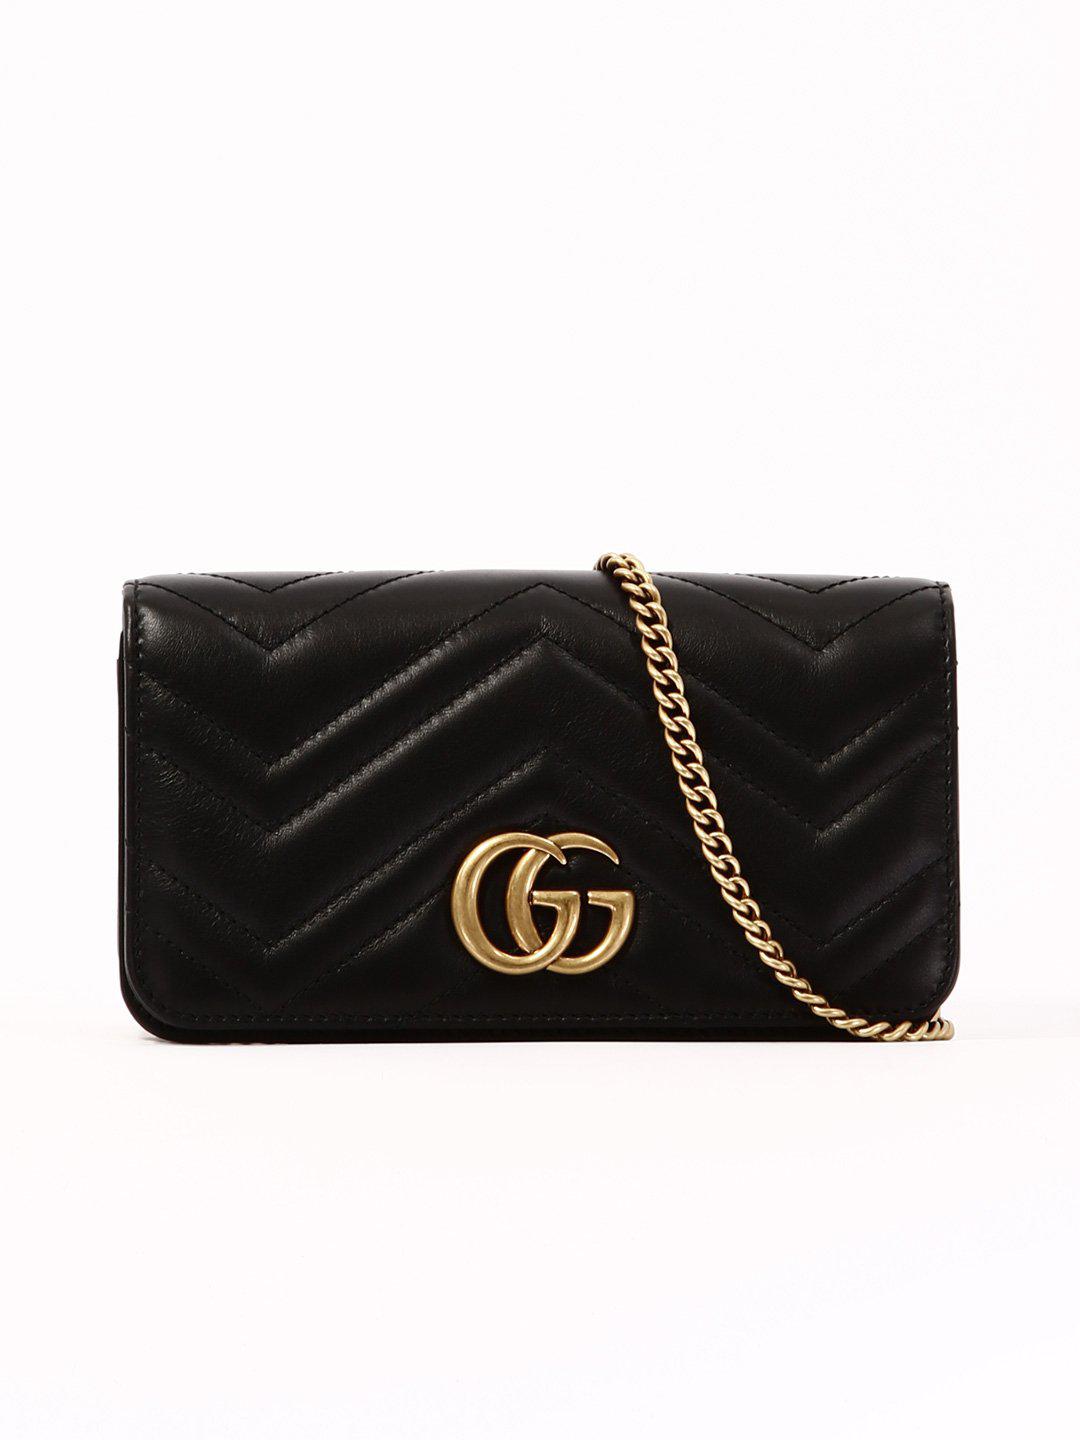 Gucci Gg Marmont Clutch Bag in Black | Lyst